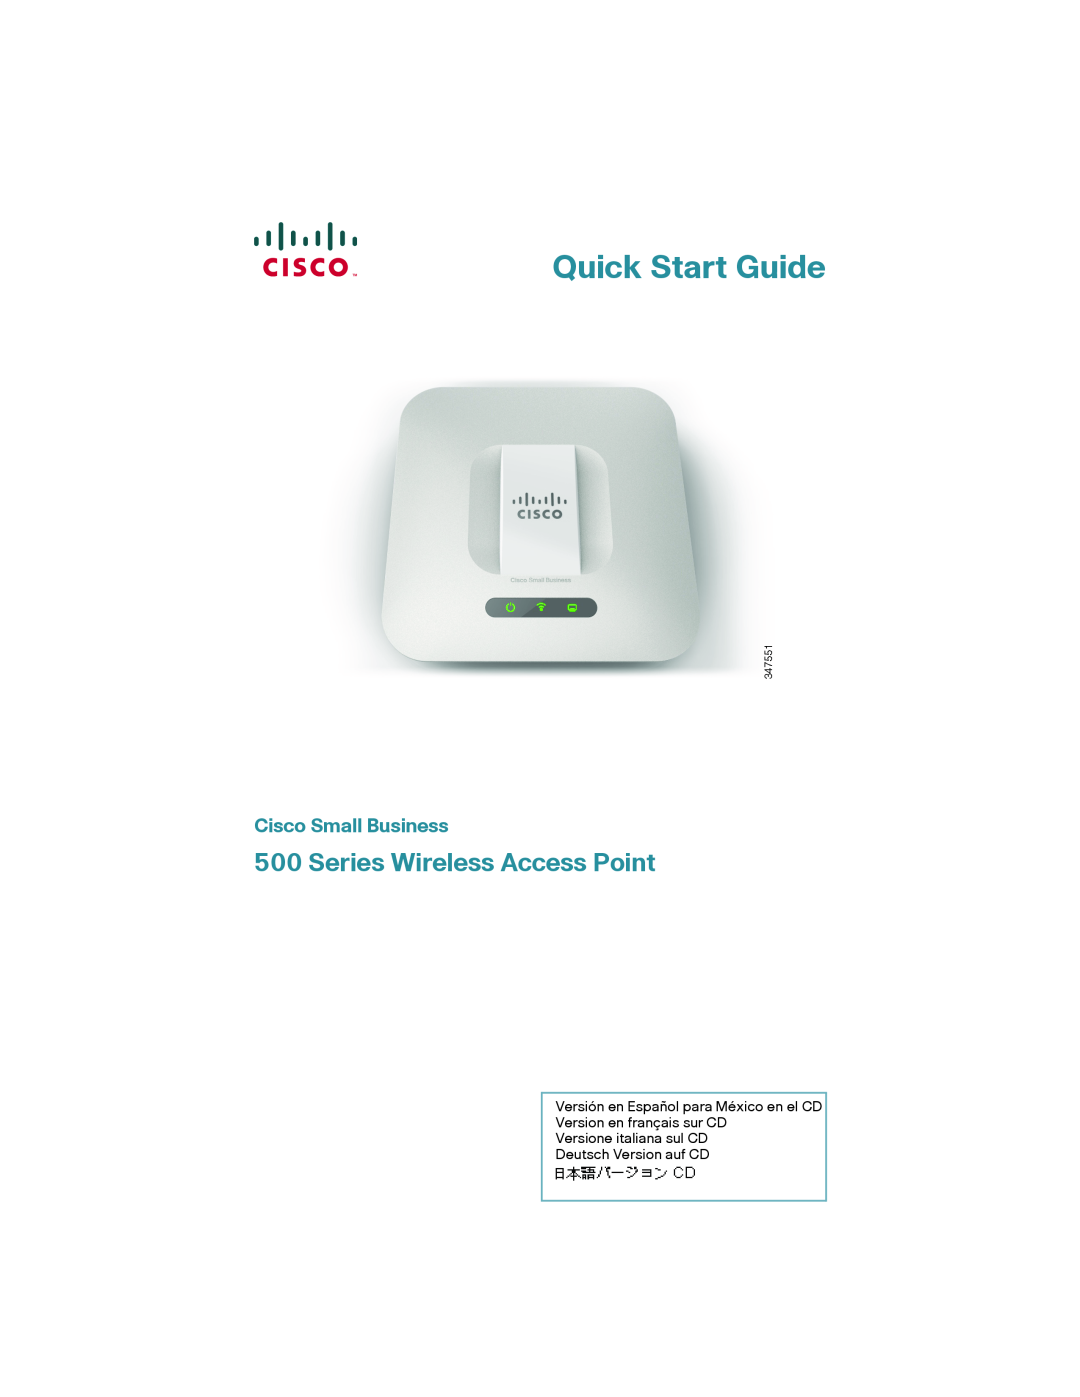 Cisco Systems WAP561AK9 quick start Cisco Small Business, Quick Start Guide, Series Wireless Access Point 